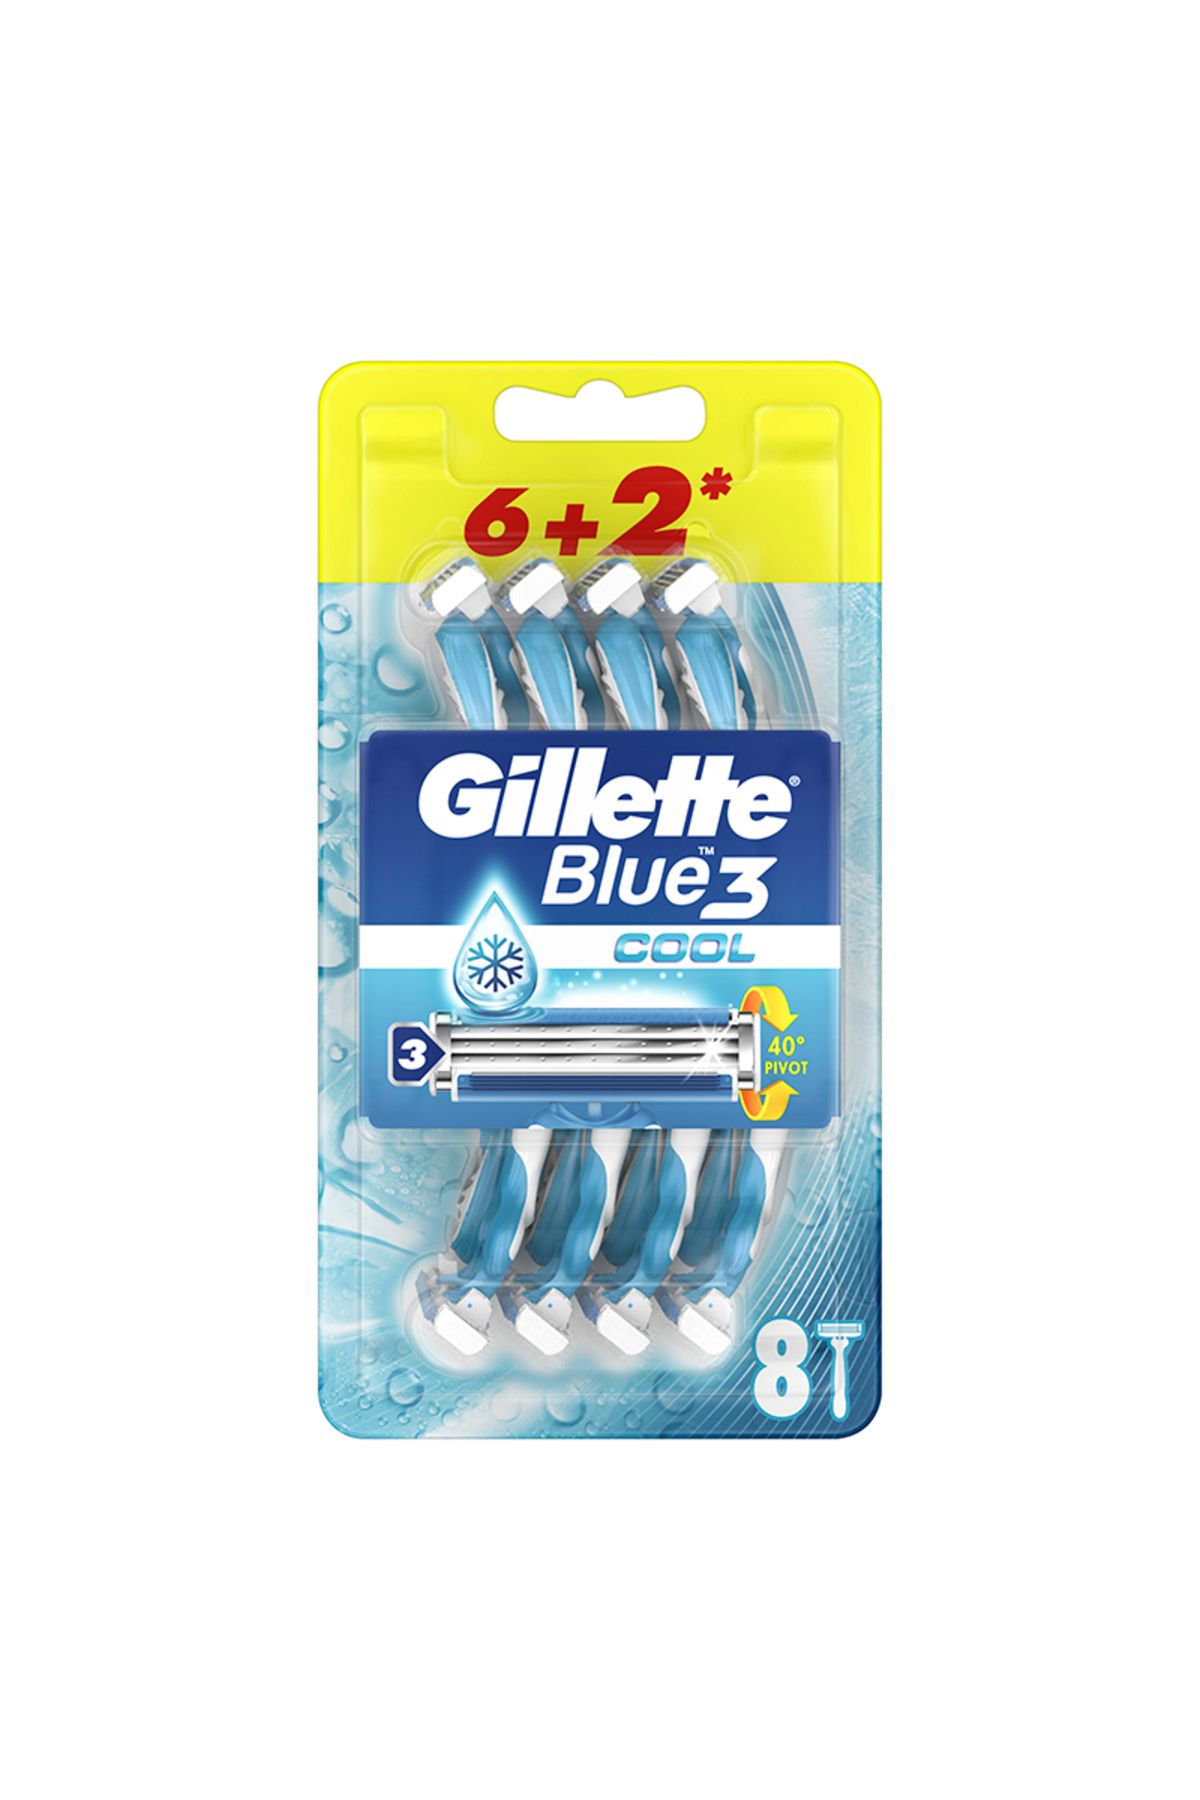 Gillette Blue3 Tıraş Bıçağı 6+2 Cool